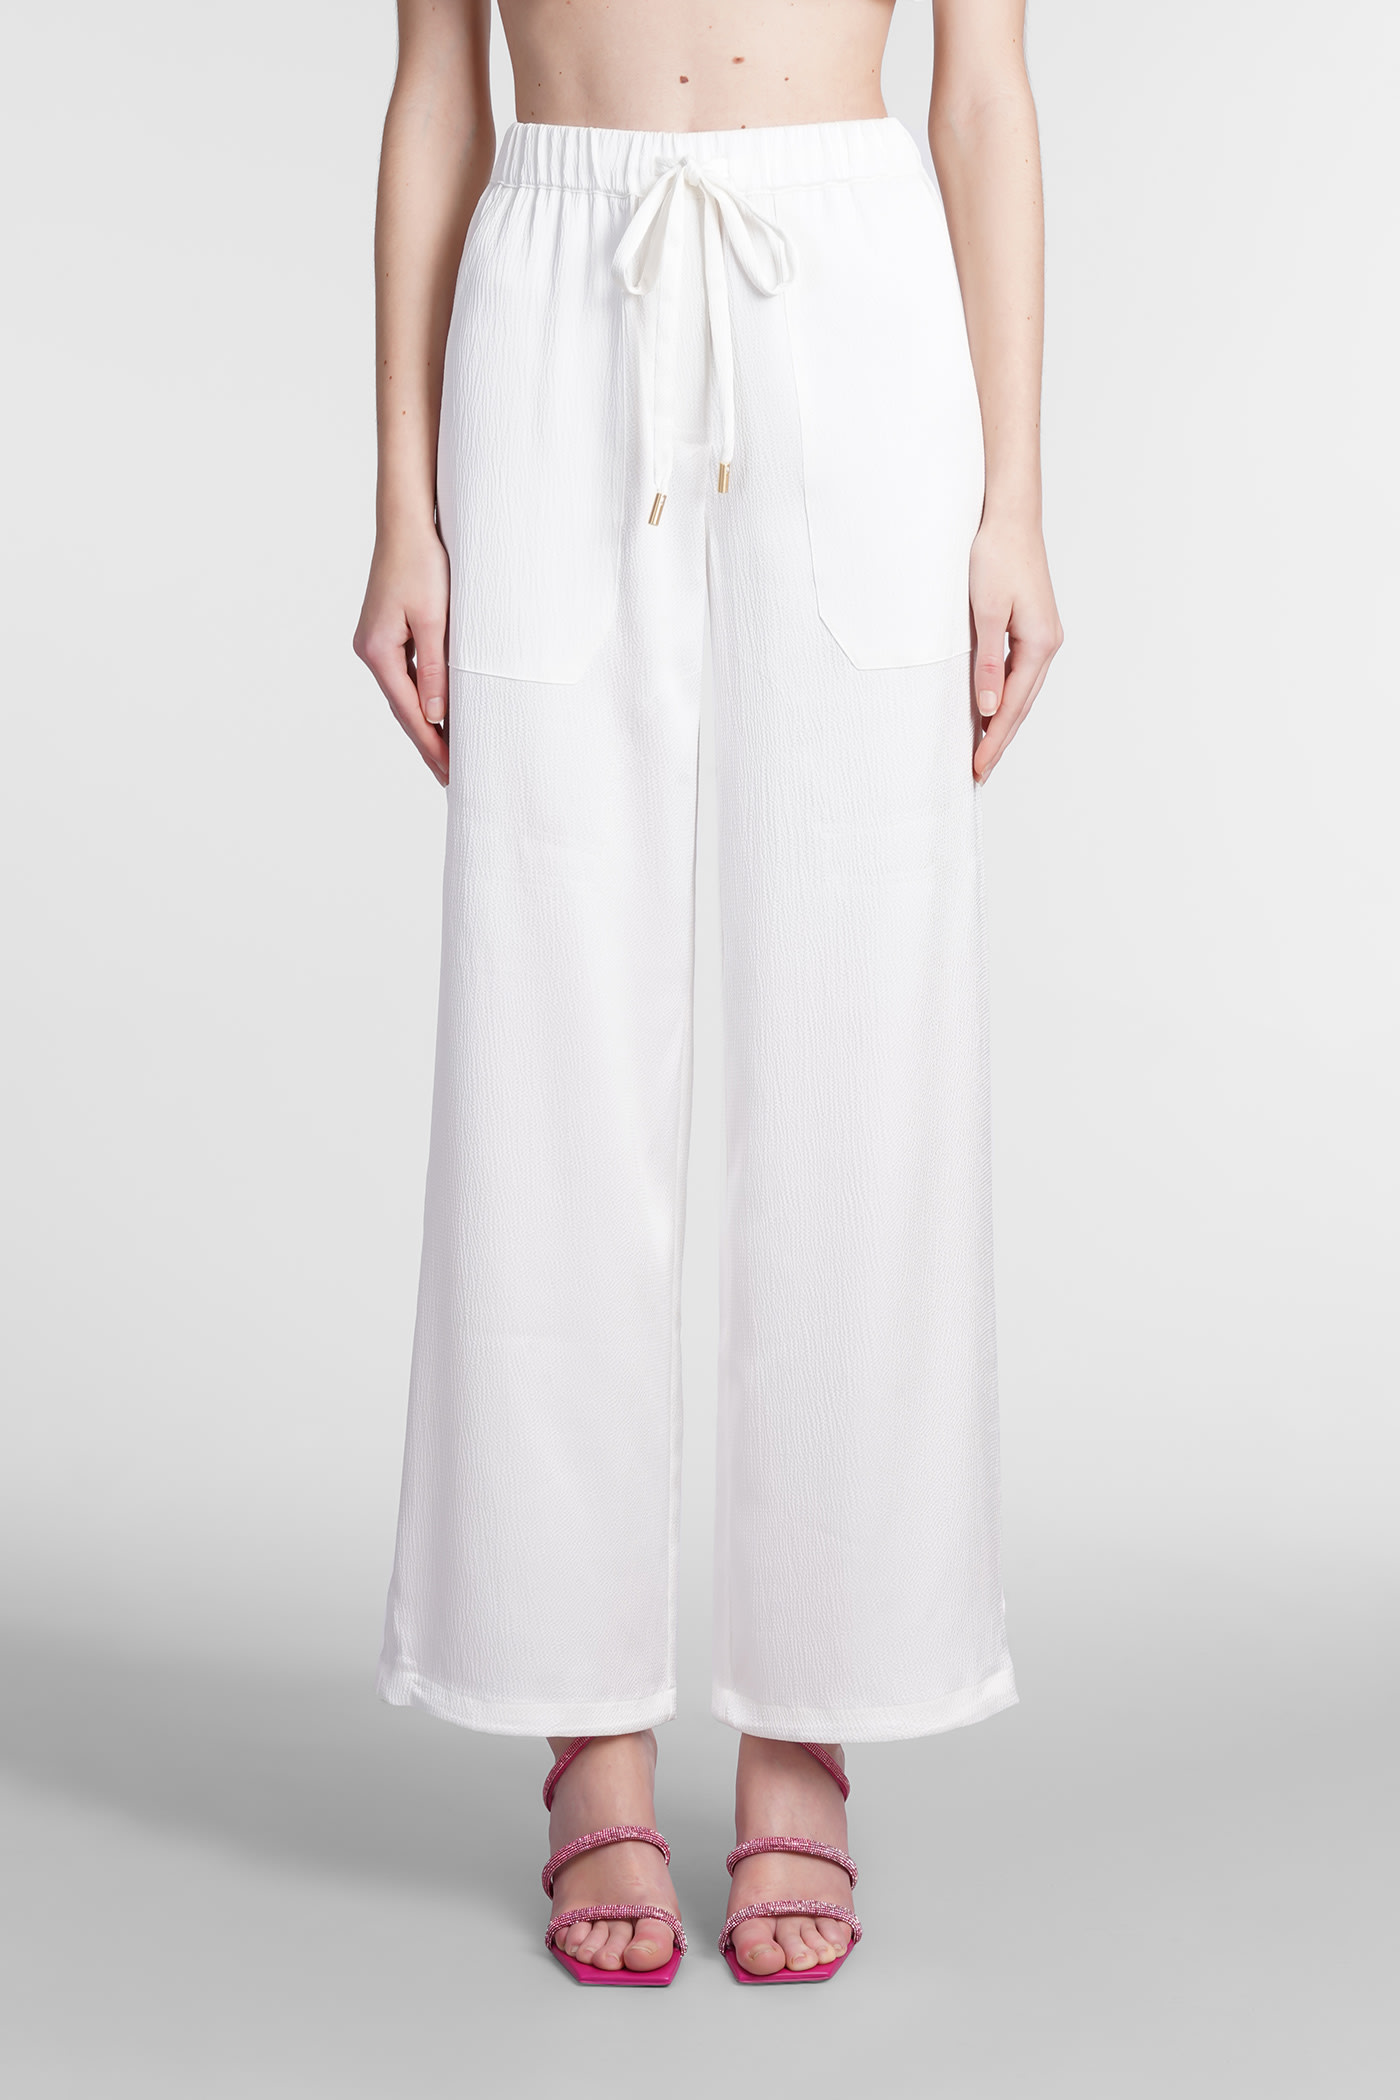 Cult Gaia Minaya Pants In White Polyester